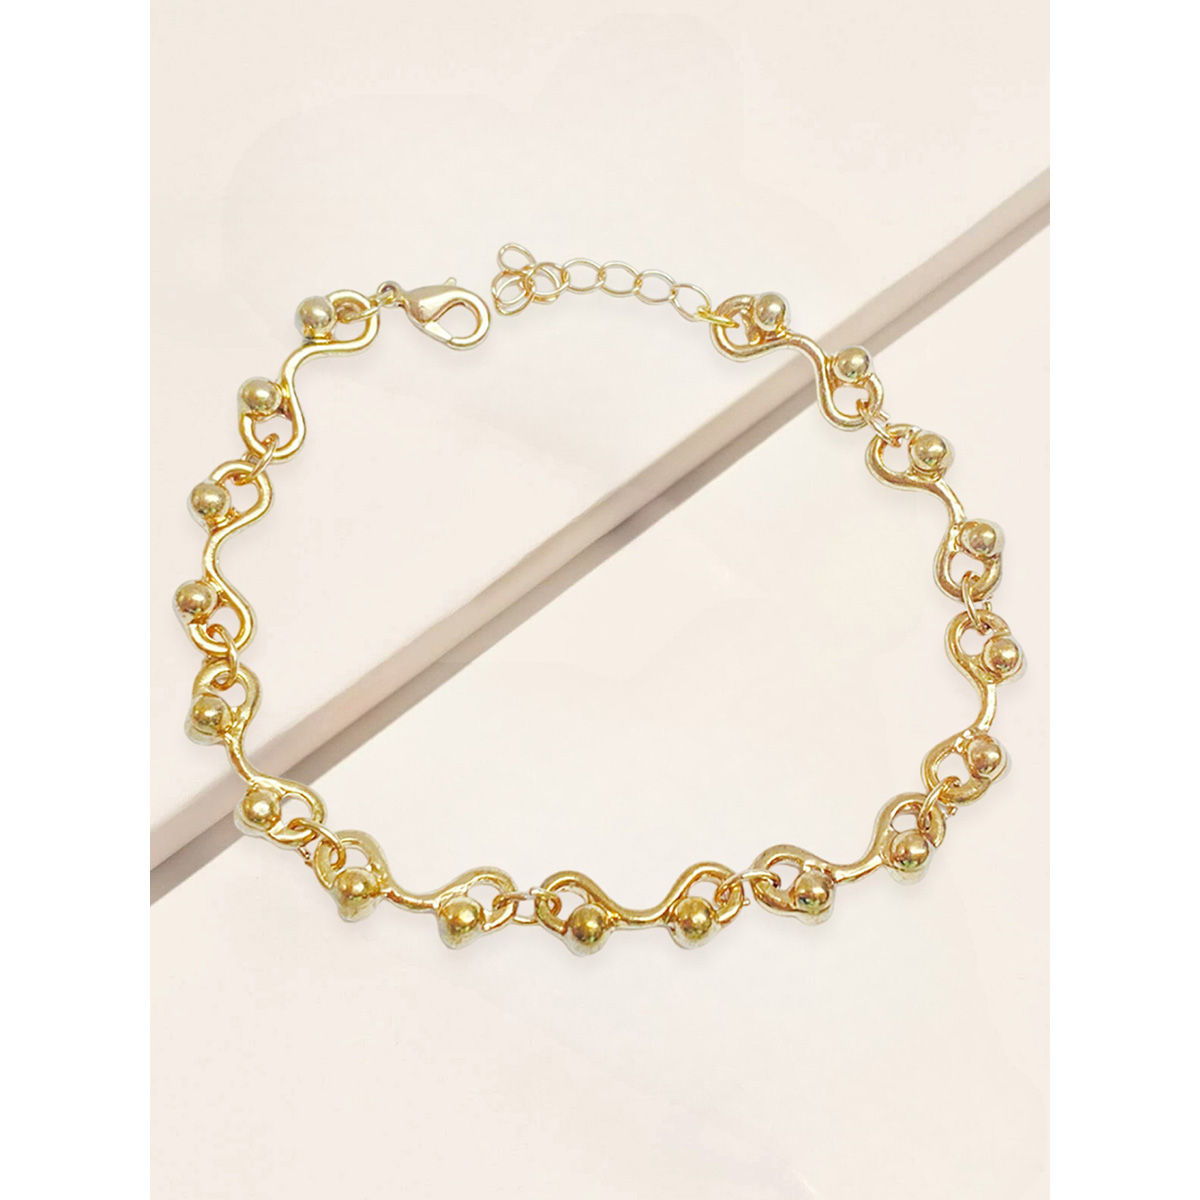 Buy Simple plain gold bangles designs online | Kalyan Jewellers